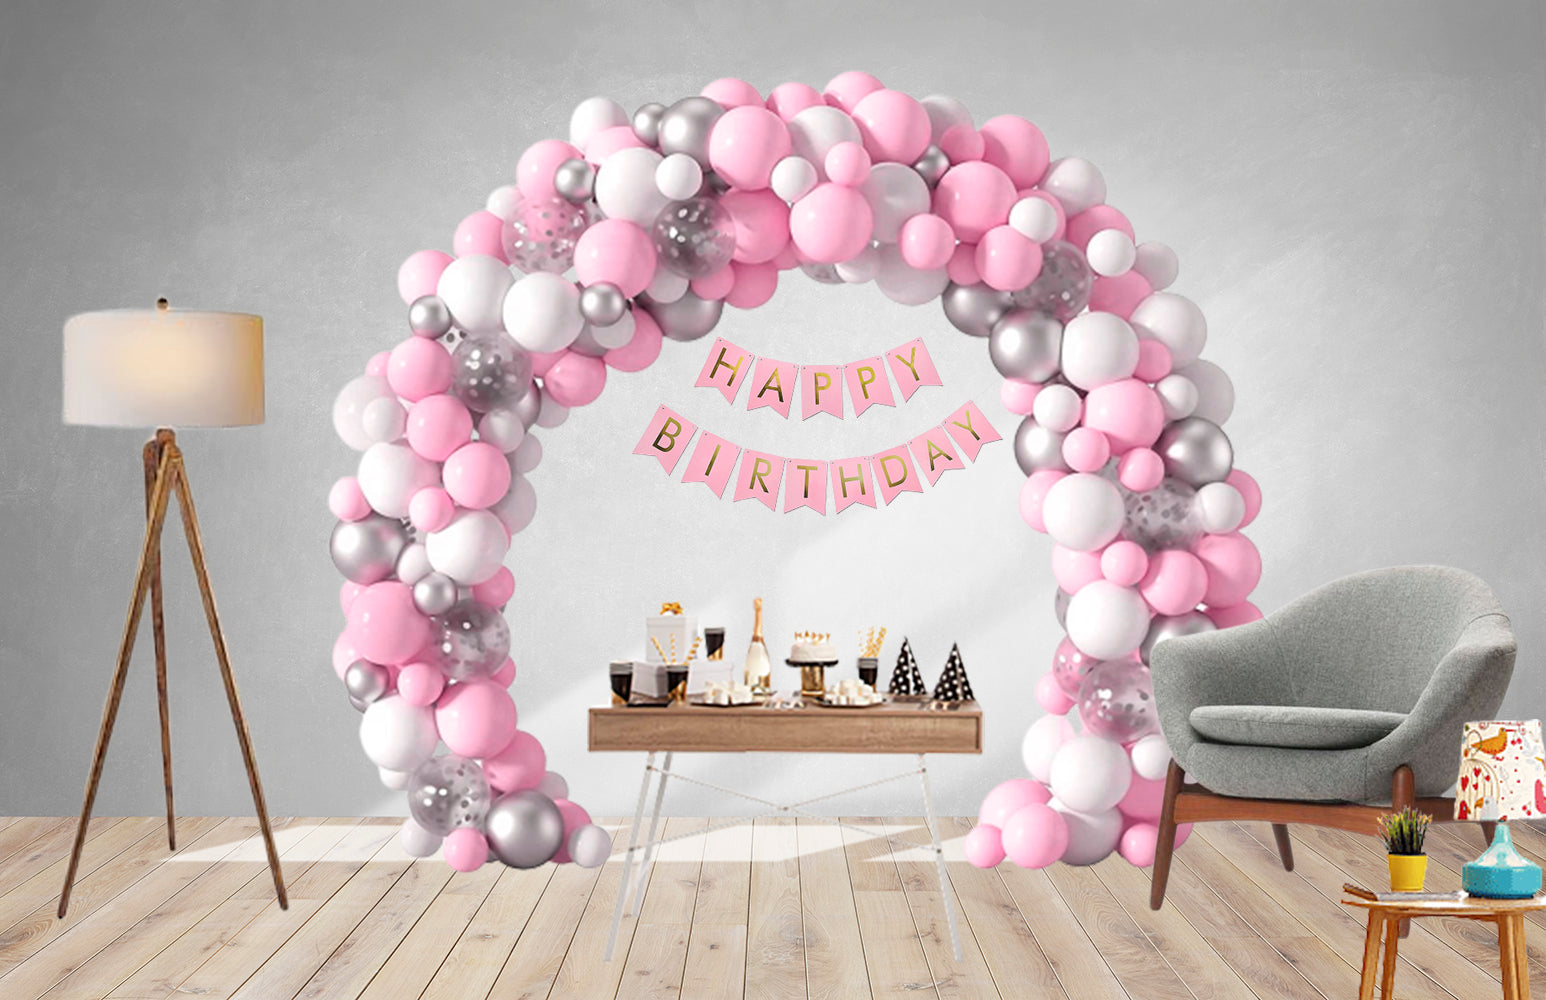 78Pcs DIY Happy Birthday Kit - White, Pink Pastel &amp; Silver Metallic Balloons, Confetti Balloon &amp; Pink Happy Birthday Banner